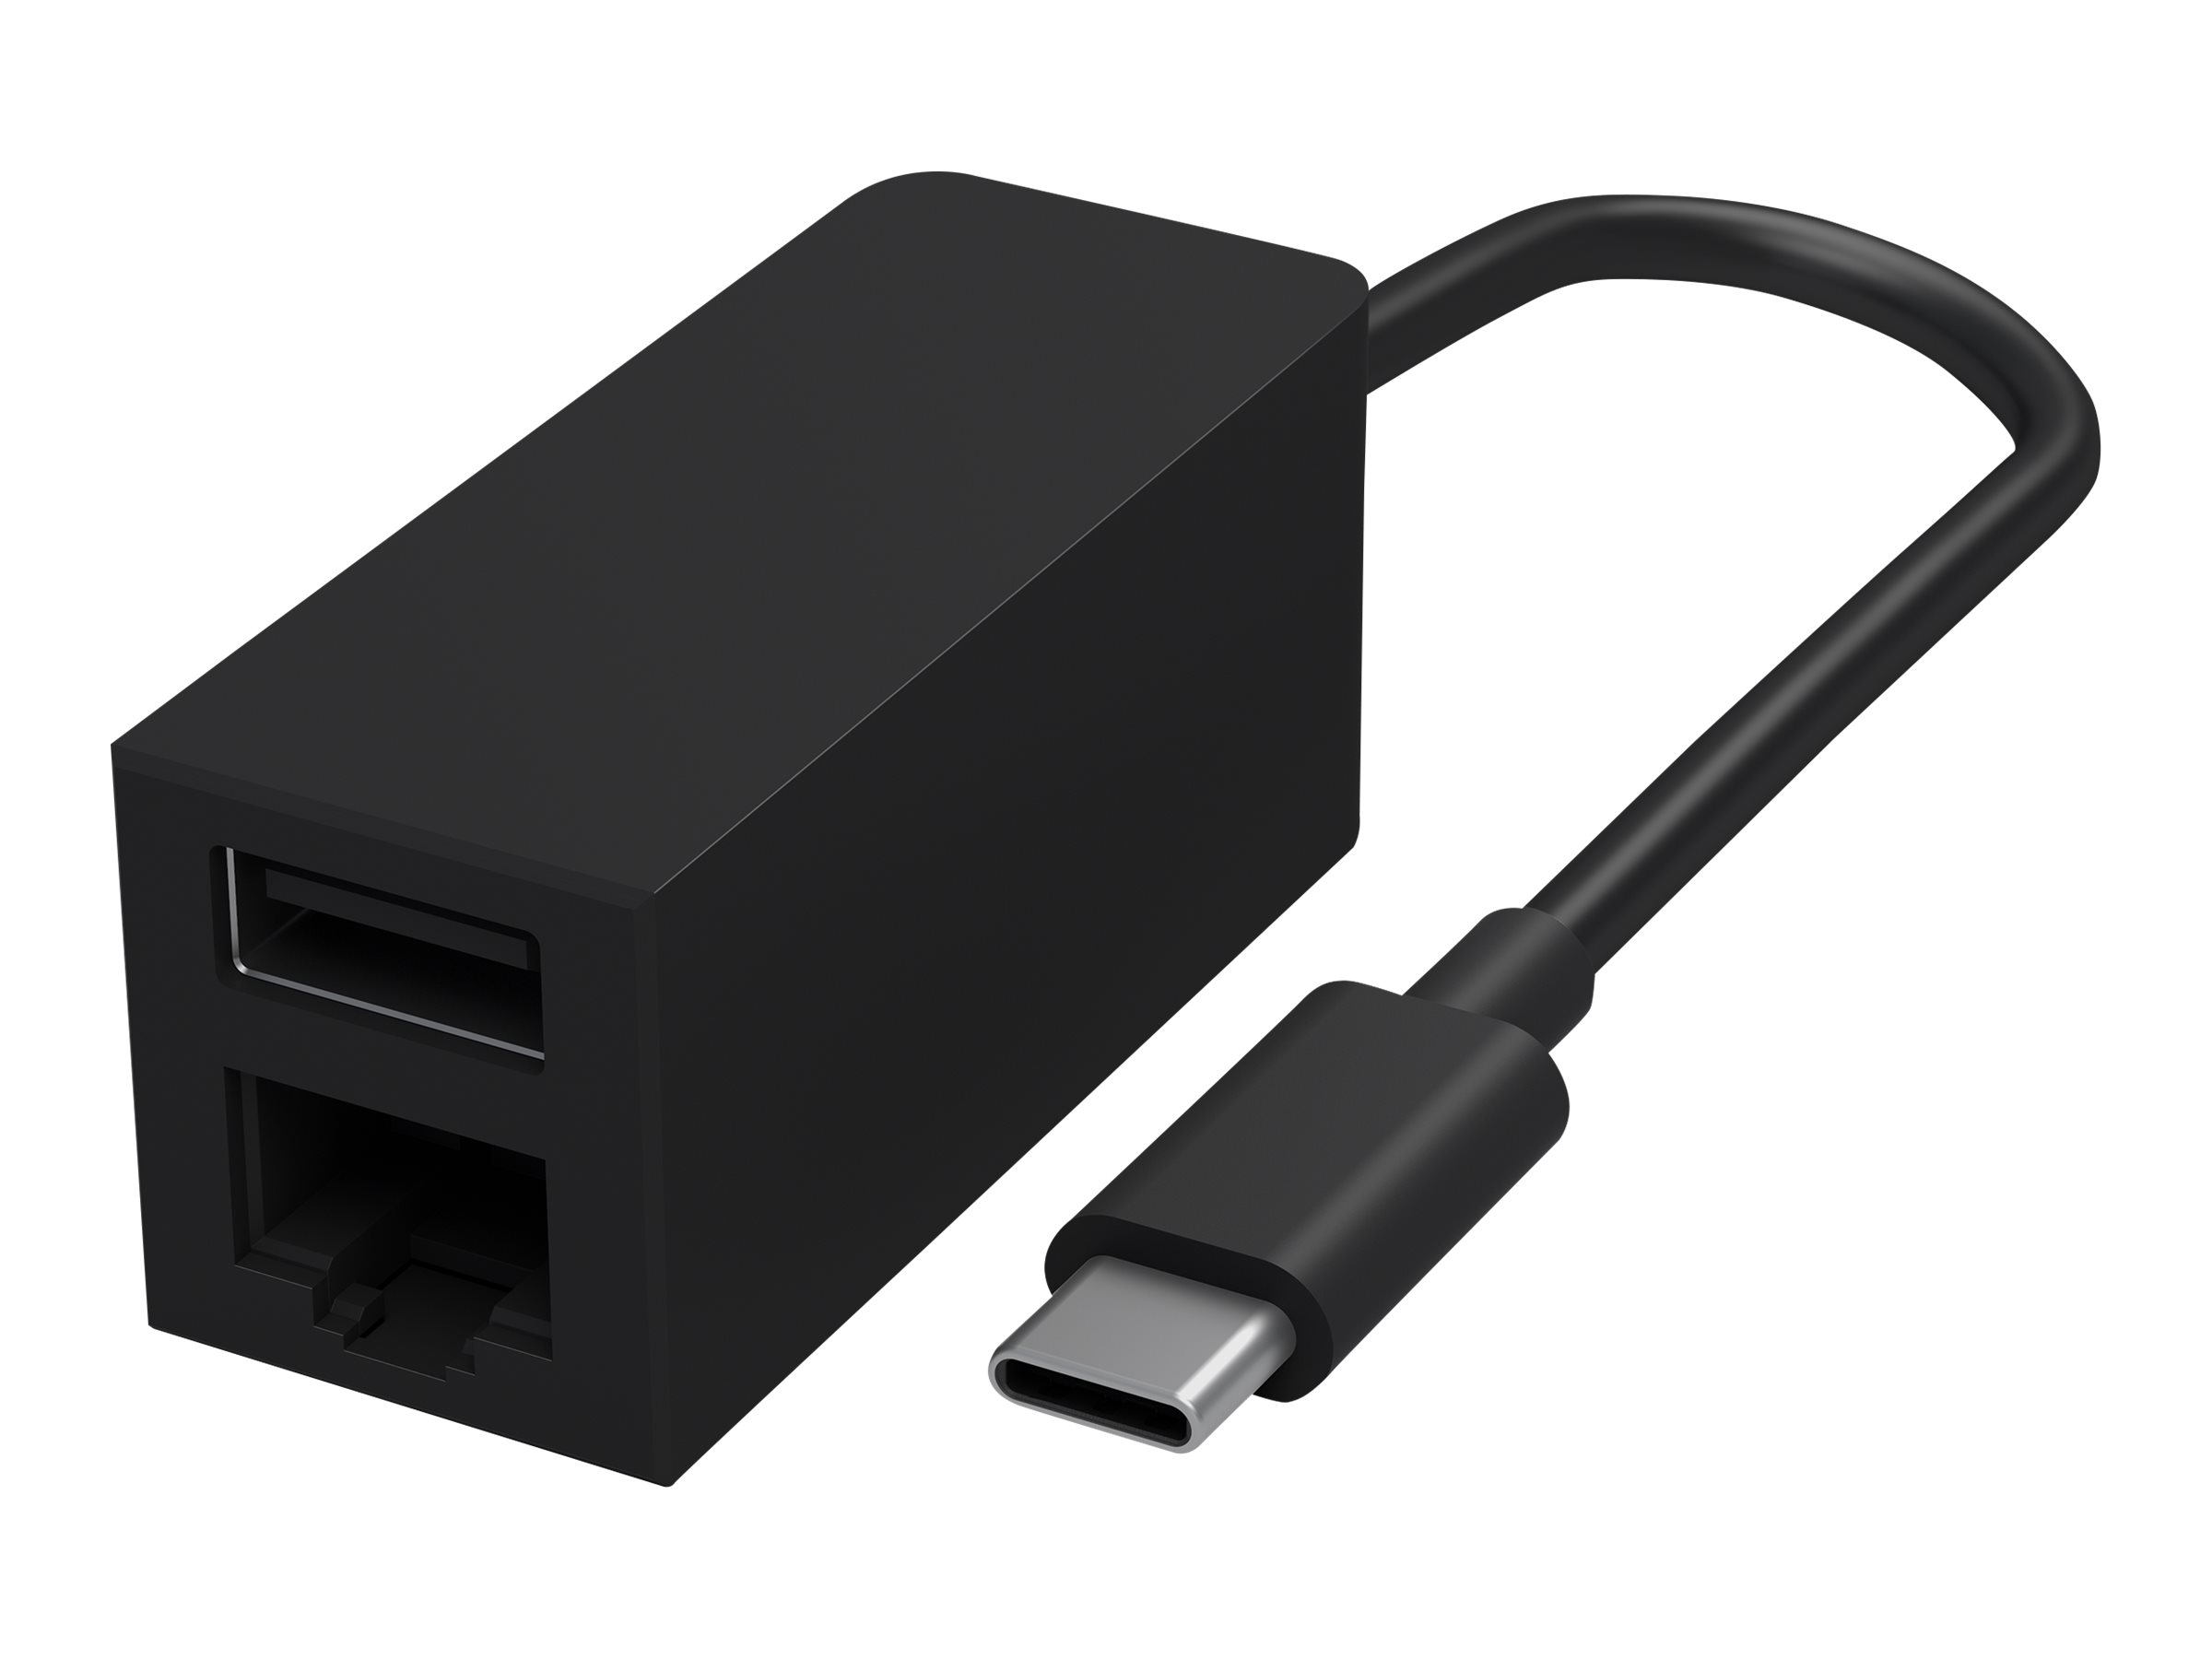 Microsoft Surface USB-C to Ethernet and USB Adapter - Netzwerk-/USB-Adapter - USB-C 3.1 - Gigabit Ethernet x 1 + USB 3.1 x 1 - S